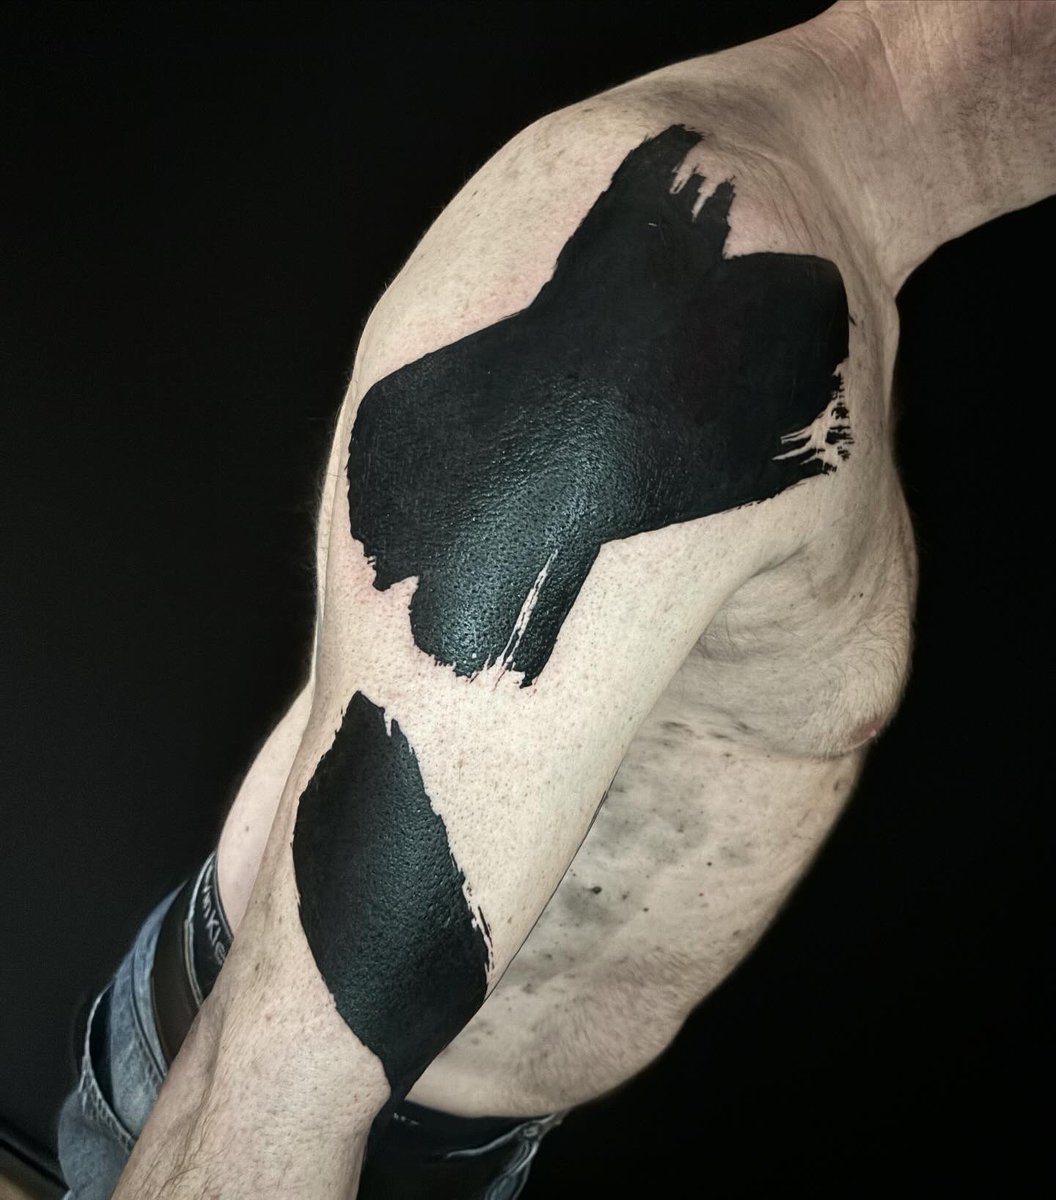 Blackwork tattoo by Pol B - No Way Back - Toronto - Canada
#tattoo #polb #blackwork #blackworktattoo #toronto #canada #blackout #blackouttattoo #abstracttattoo #paintbrushes